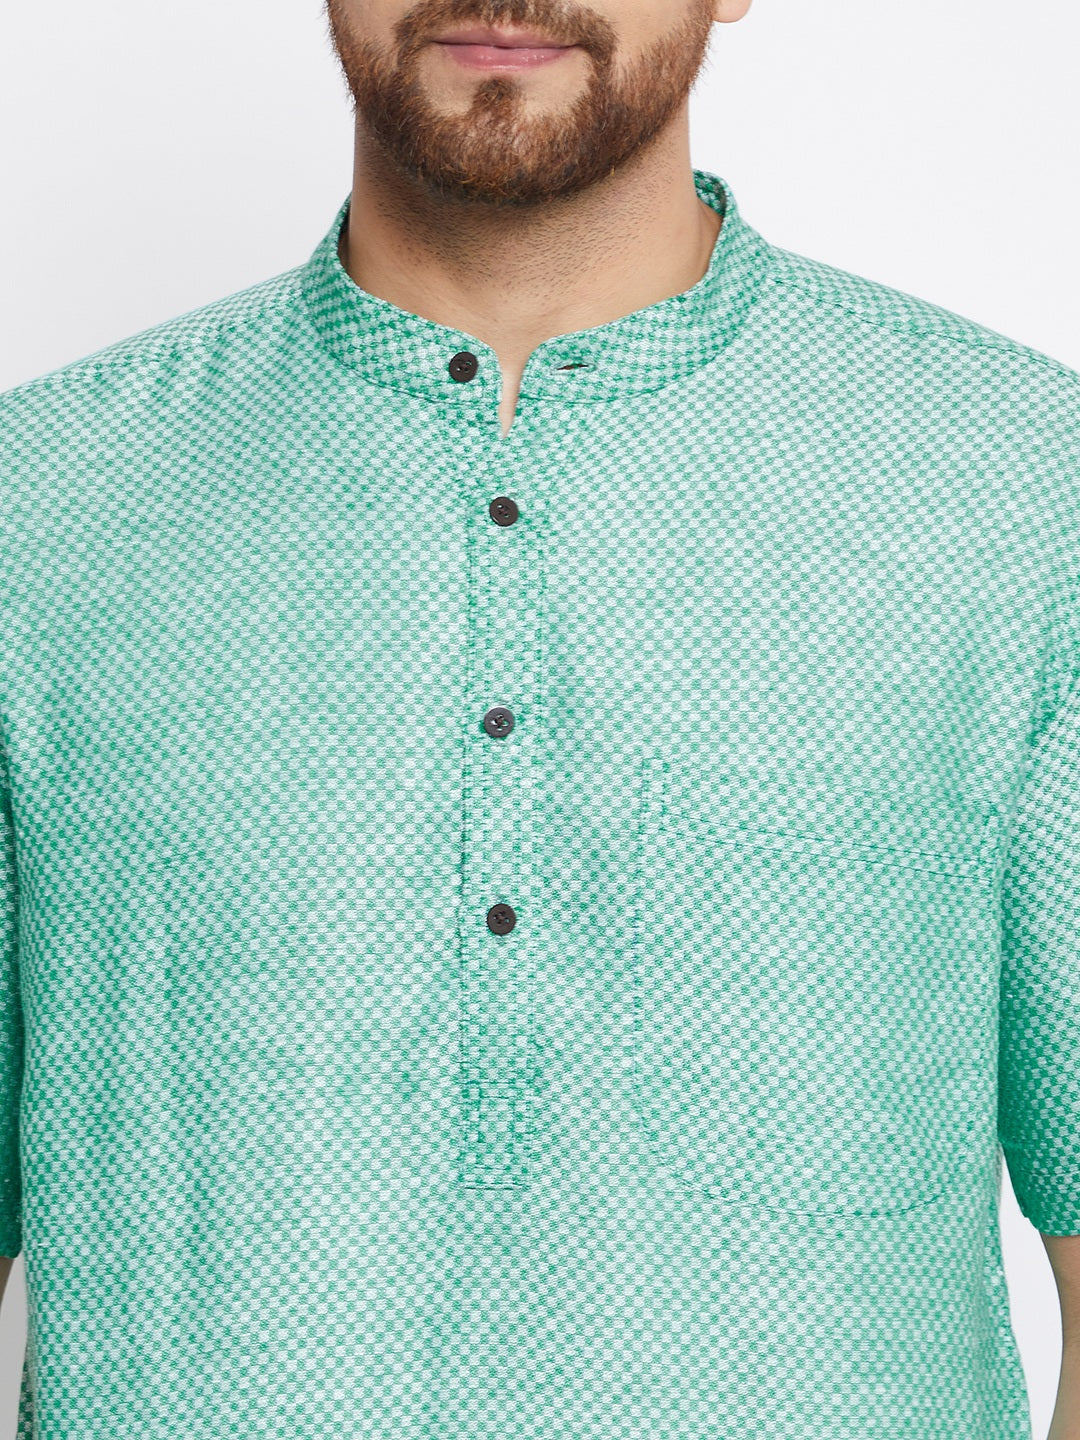 Men's Pure Cotton Striped Green Kurta - Even Apparels